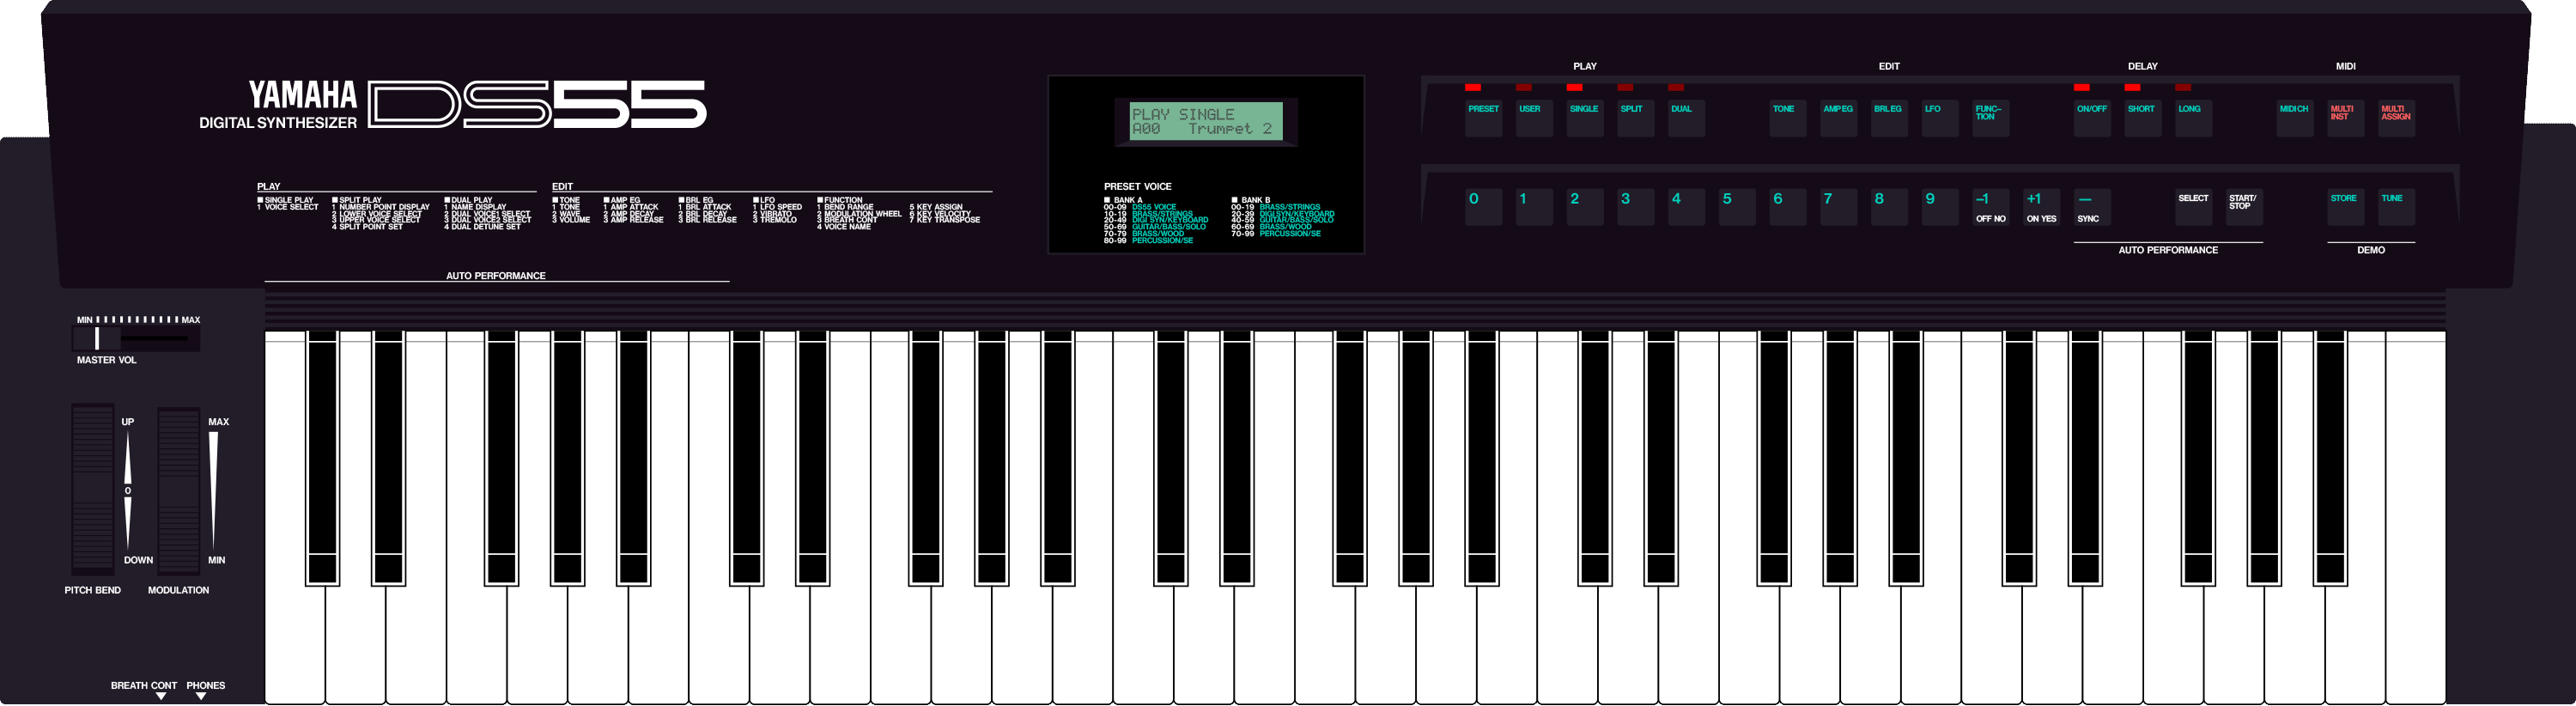 Yamaha EOS DS55 fm 4op digital synthesizer